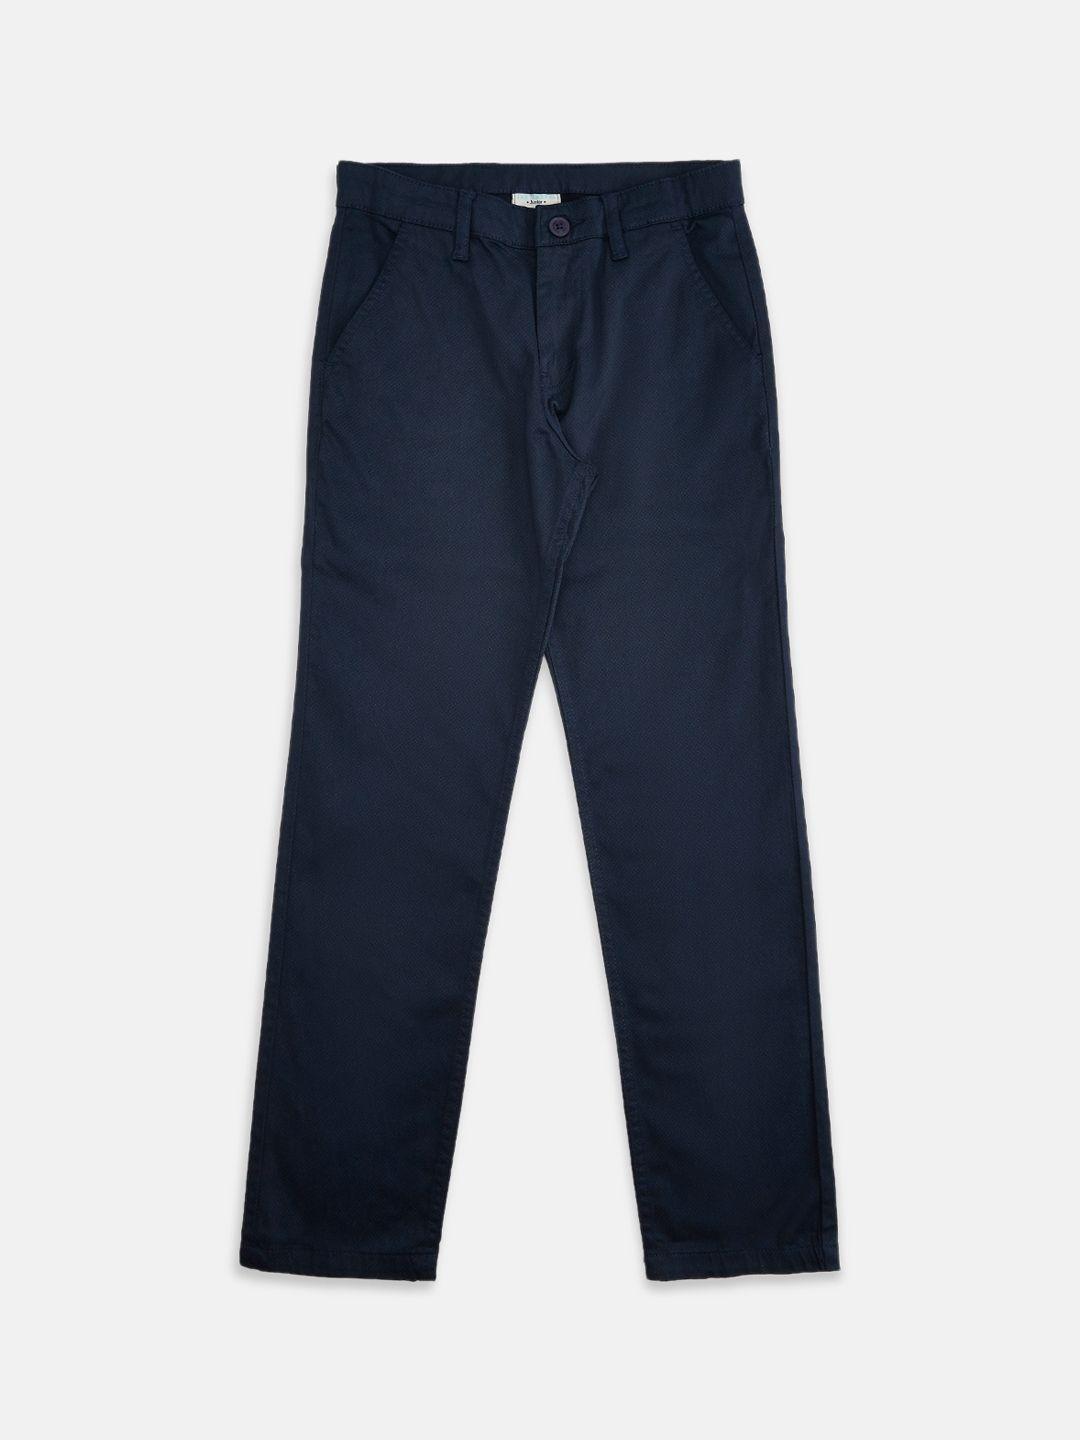 pantaloons junior boys cotton  chinos trousers